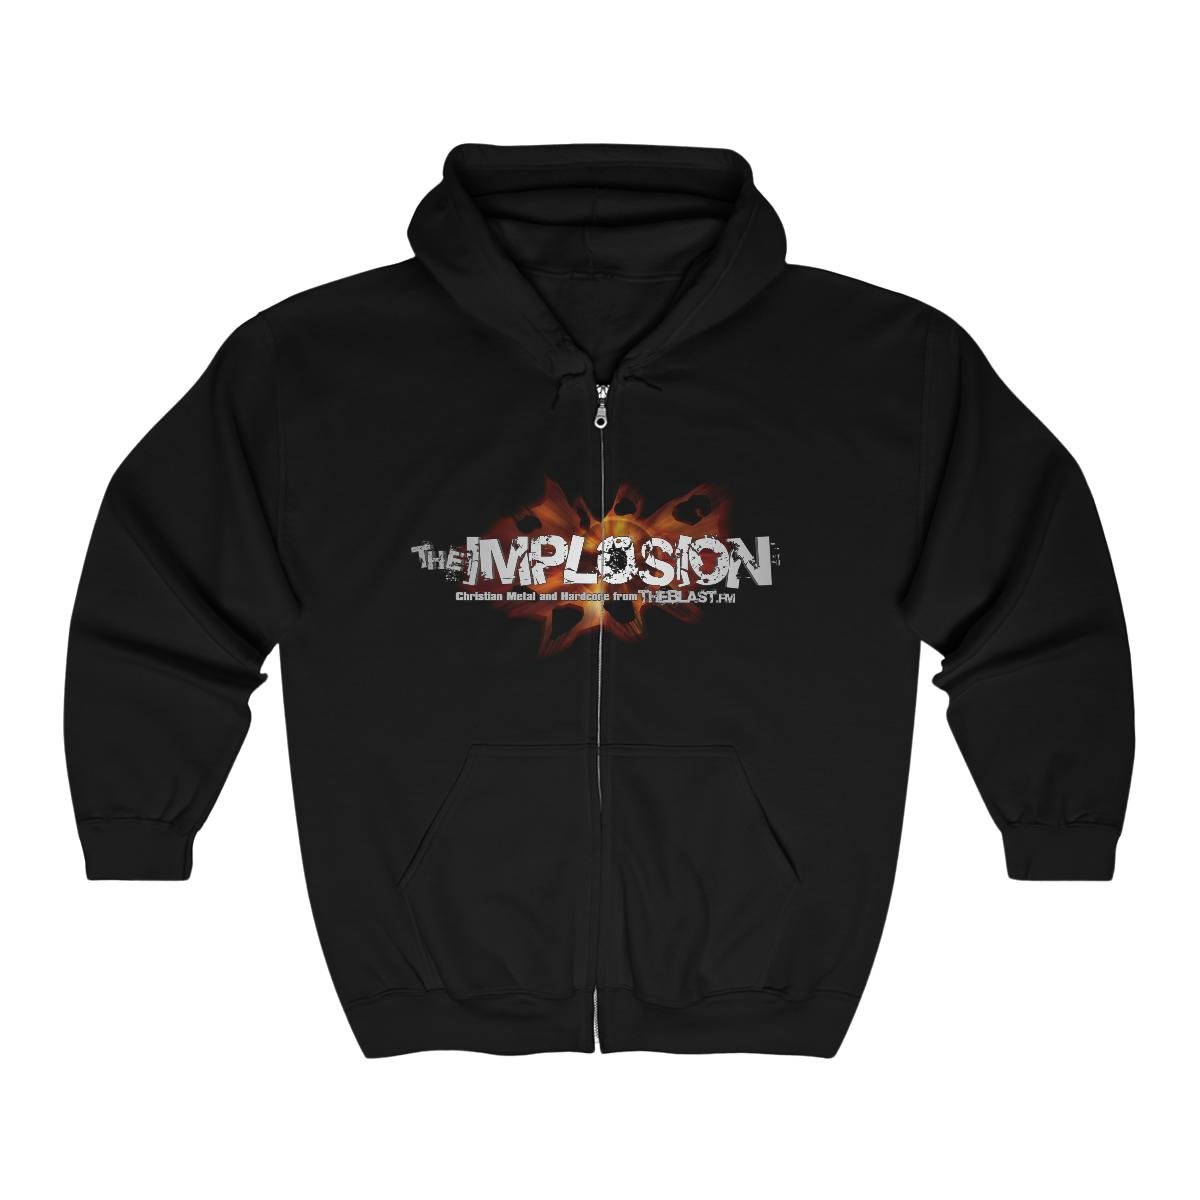 TheBlast.FM – The Implosion Full Zip Hooded Sweatshirt